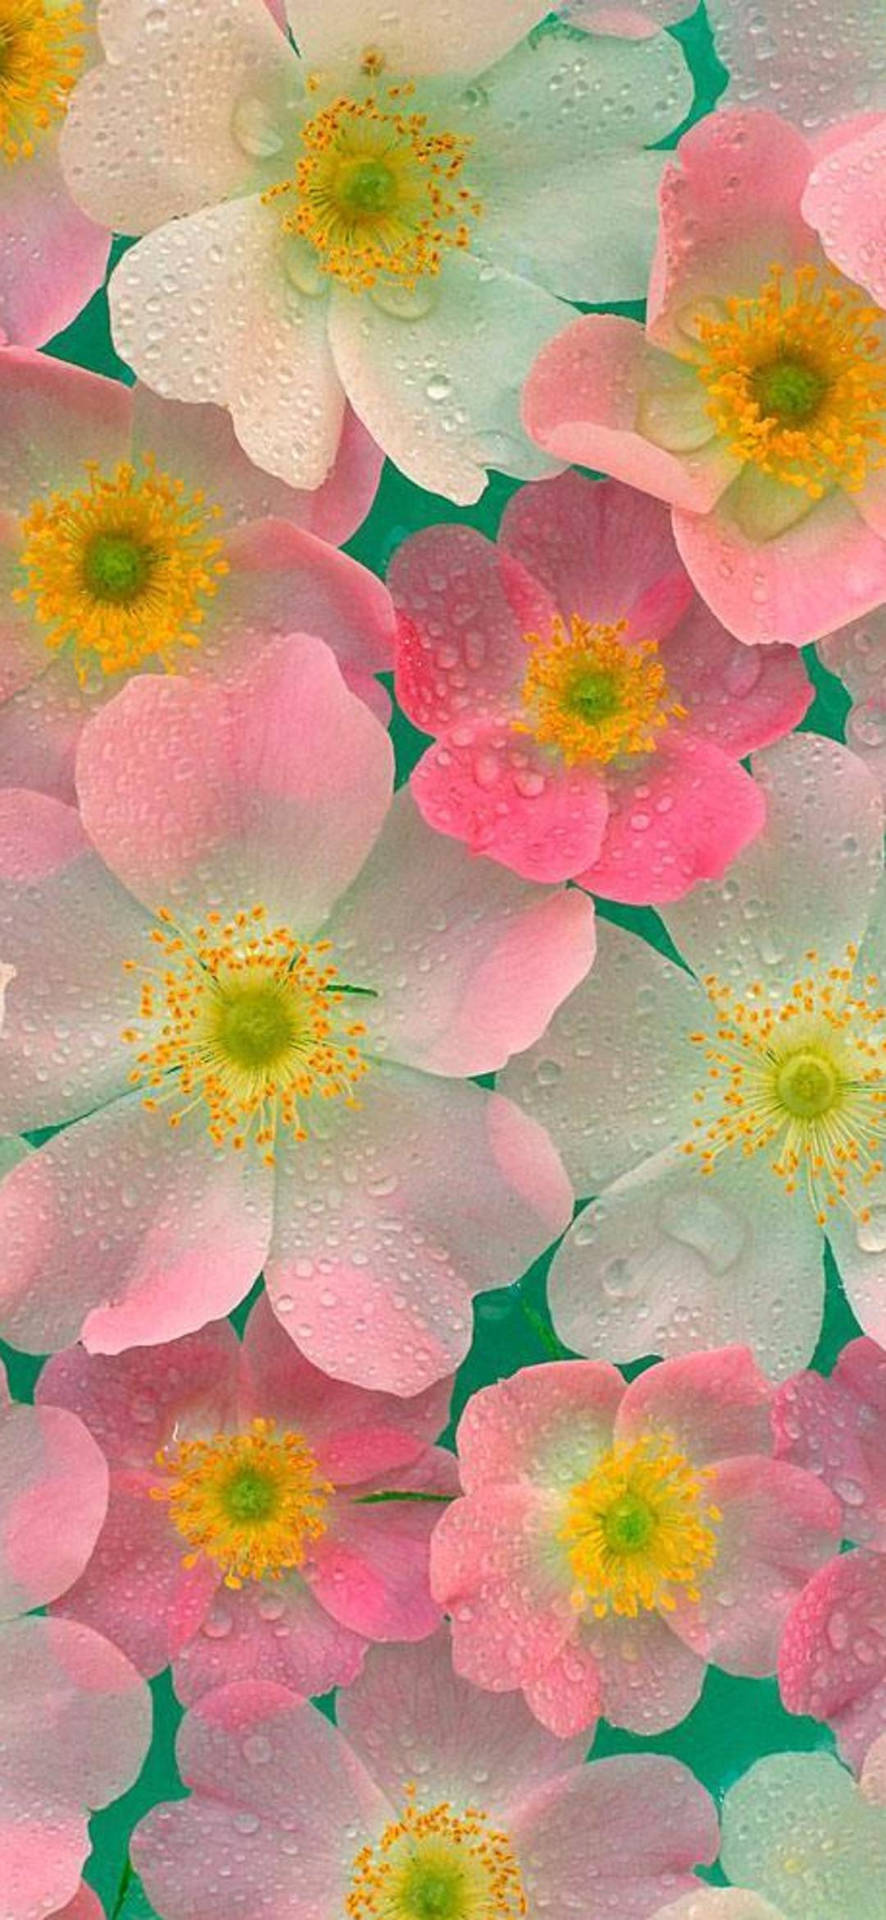 Details more than 75 flower wallpaper for mobile best